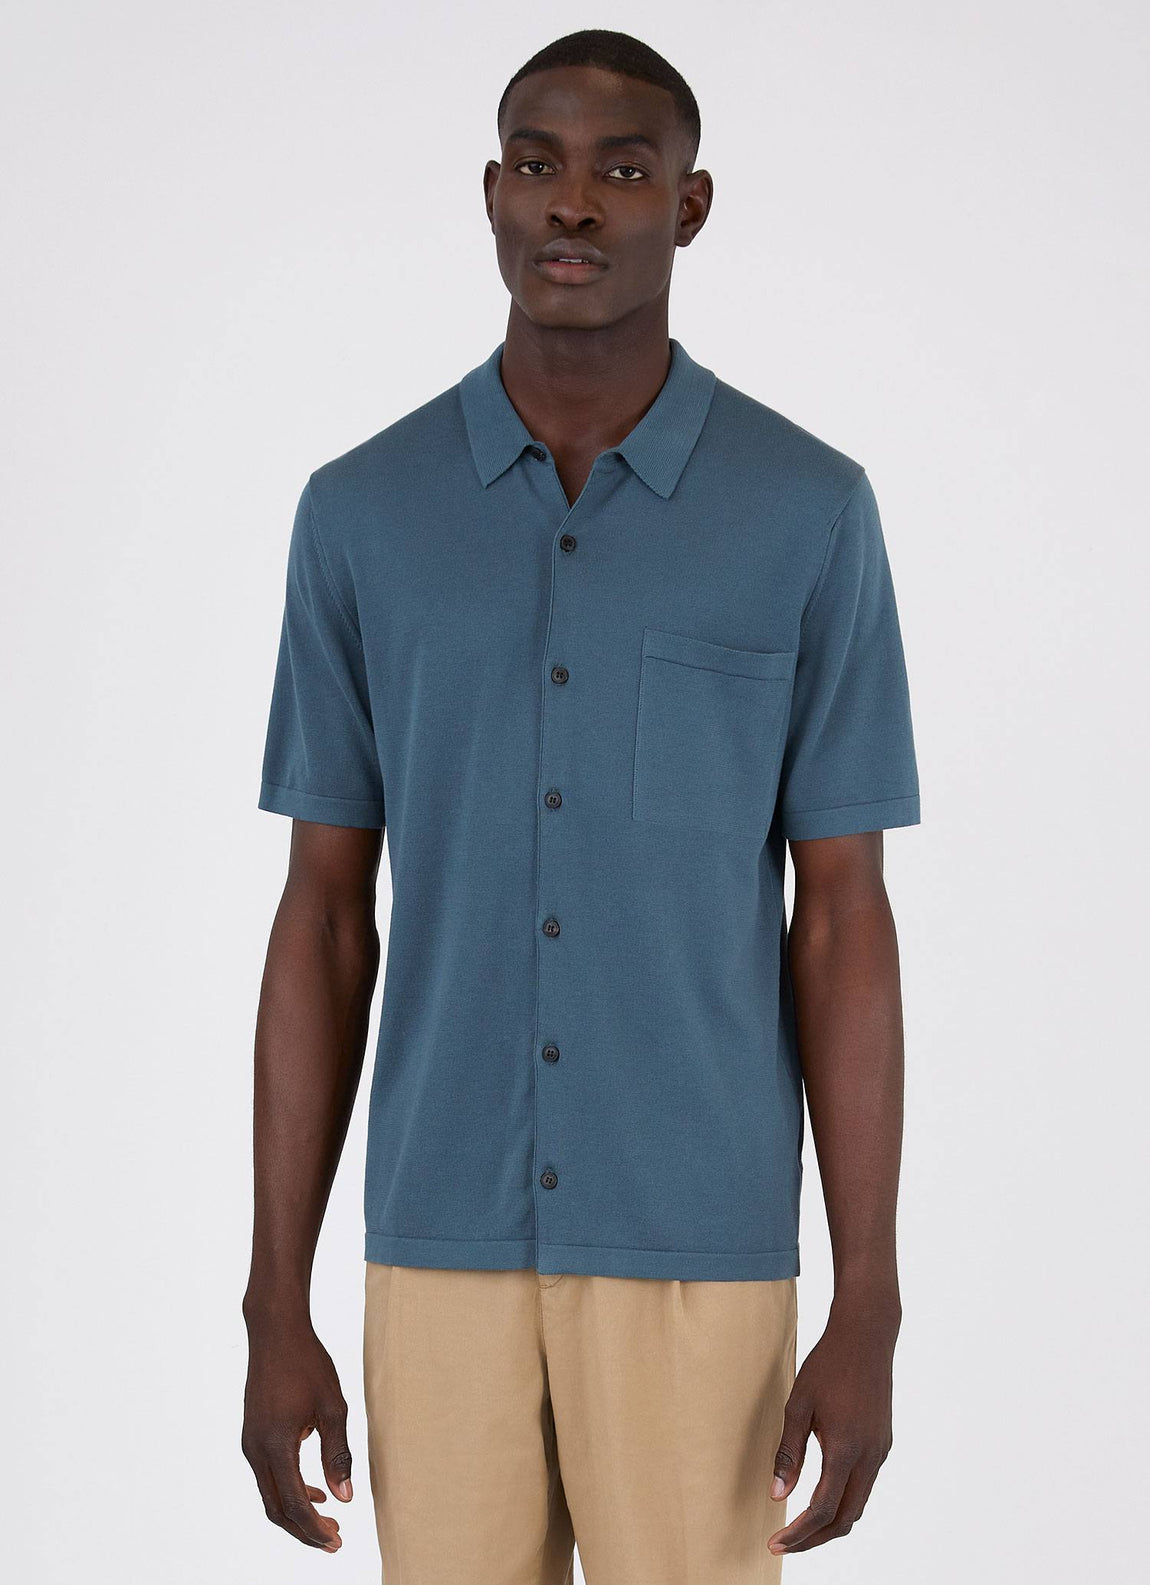 Men's Sea Island Cotton Knit Shirt in Dark Petrol